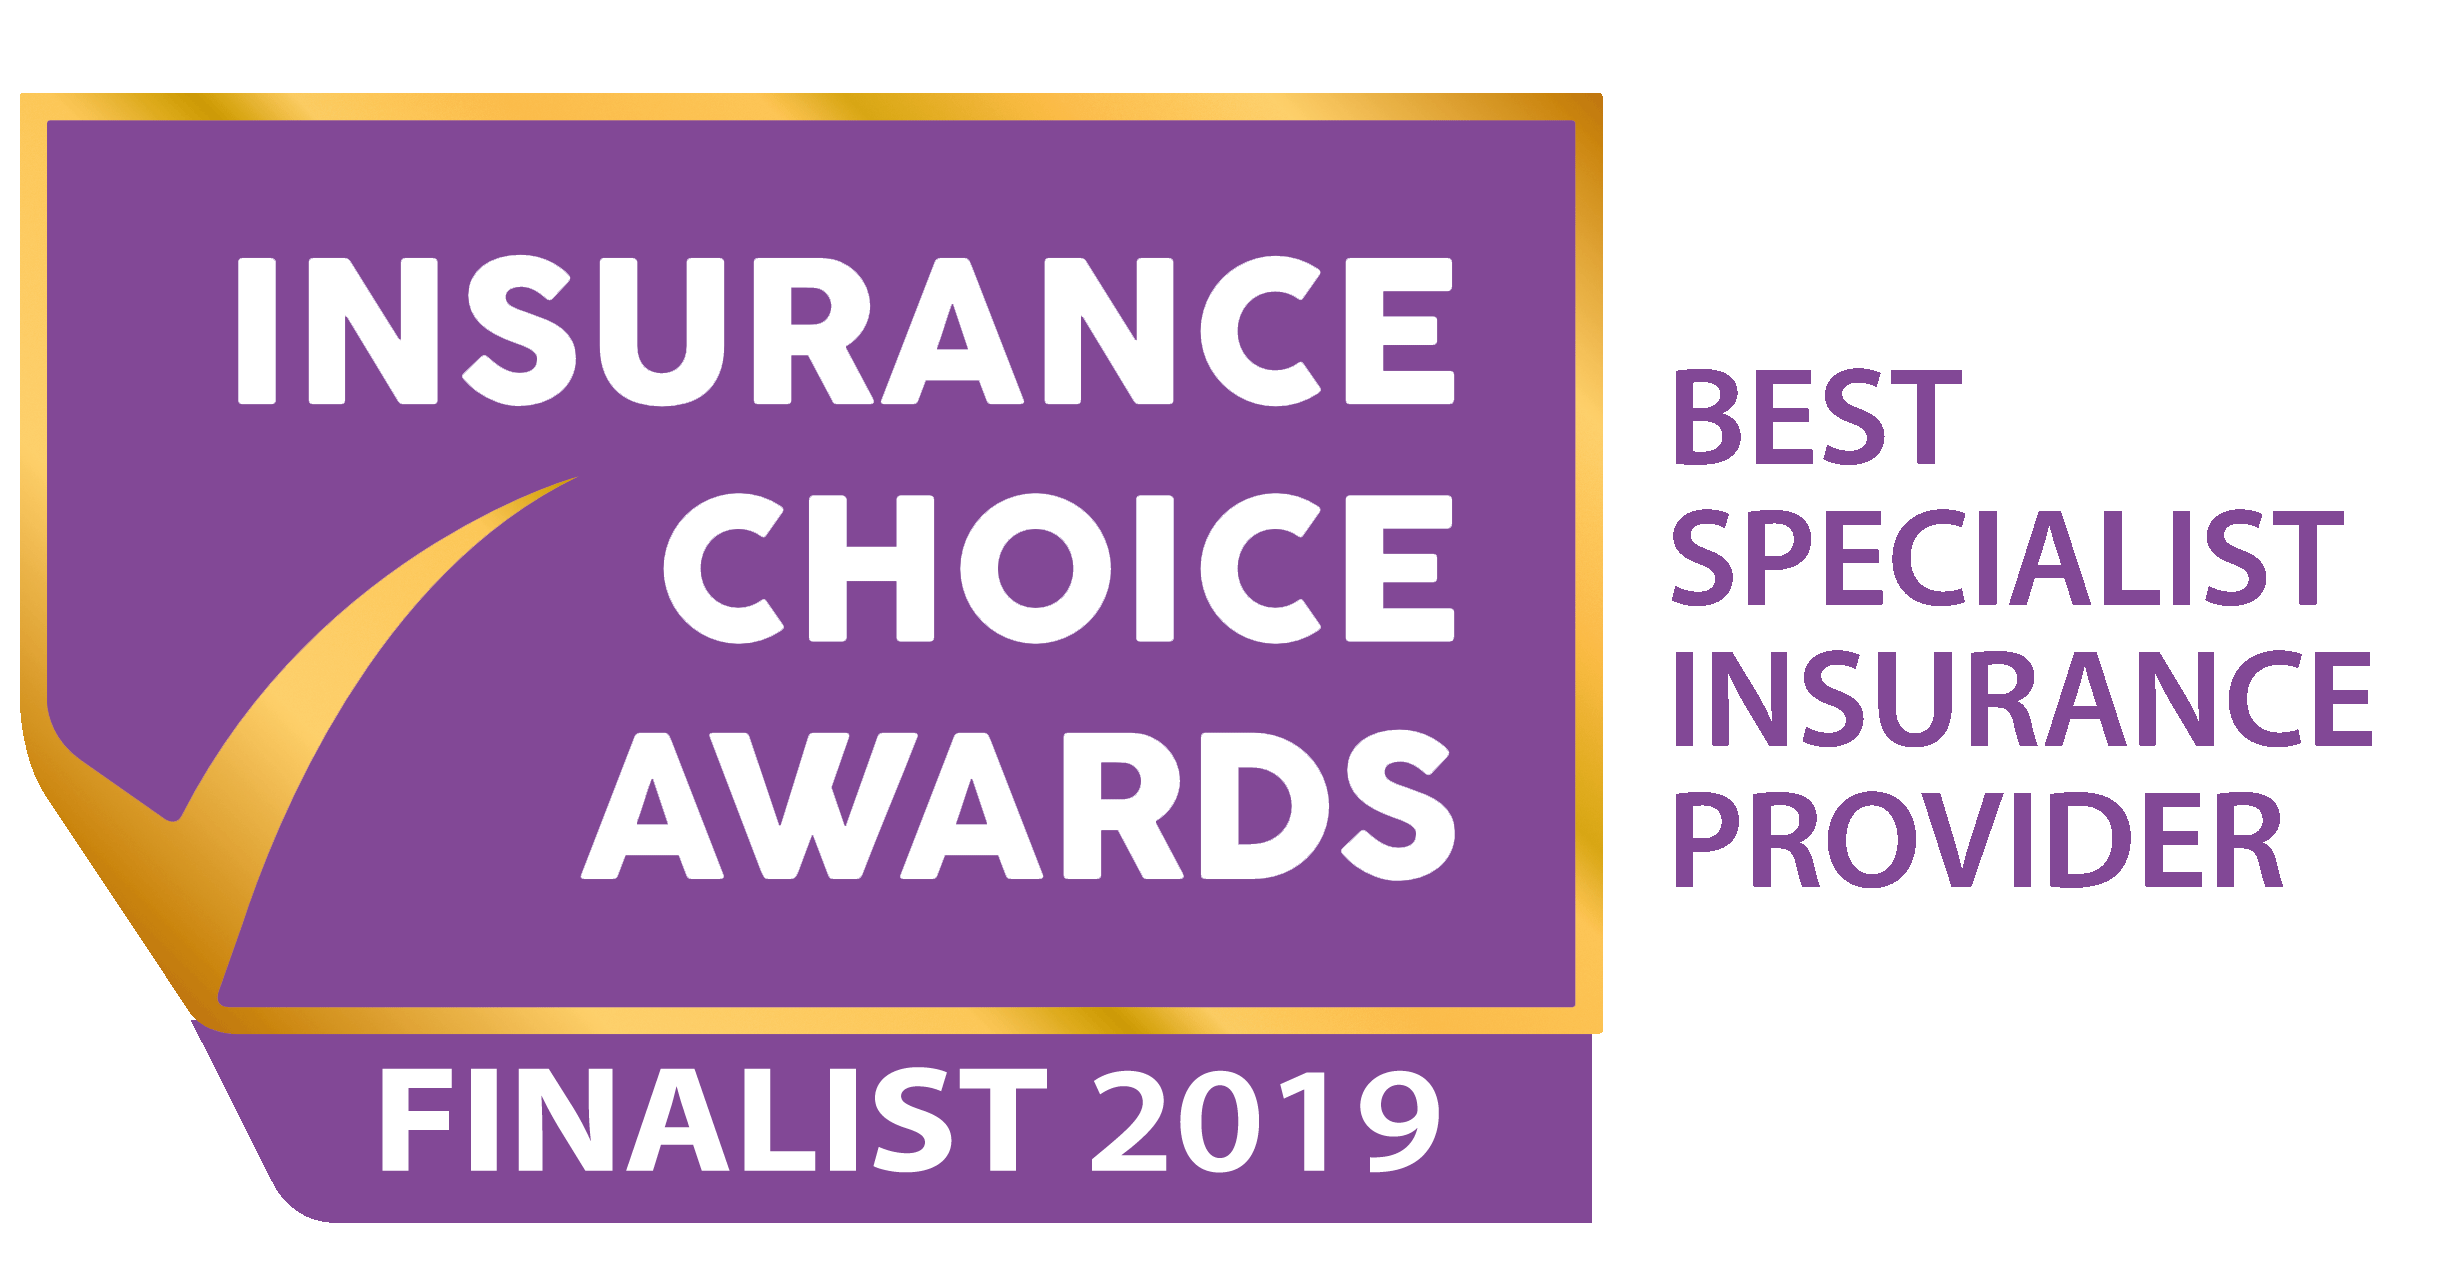 Insurance Choice Awards Finalist 2019 Logo